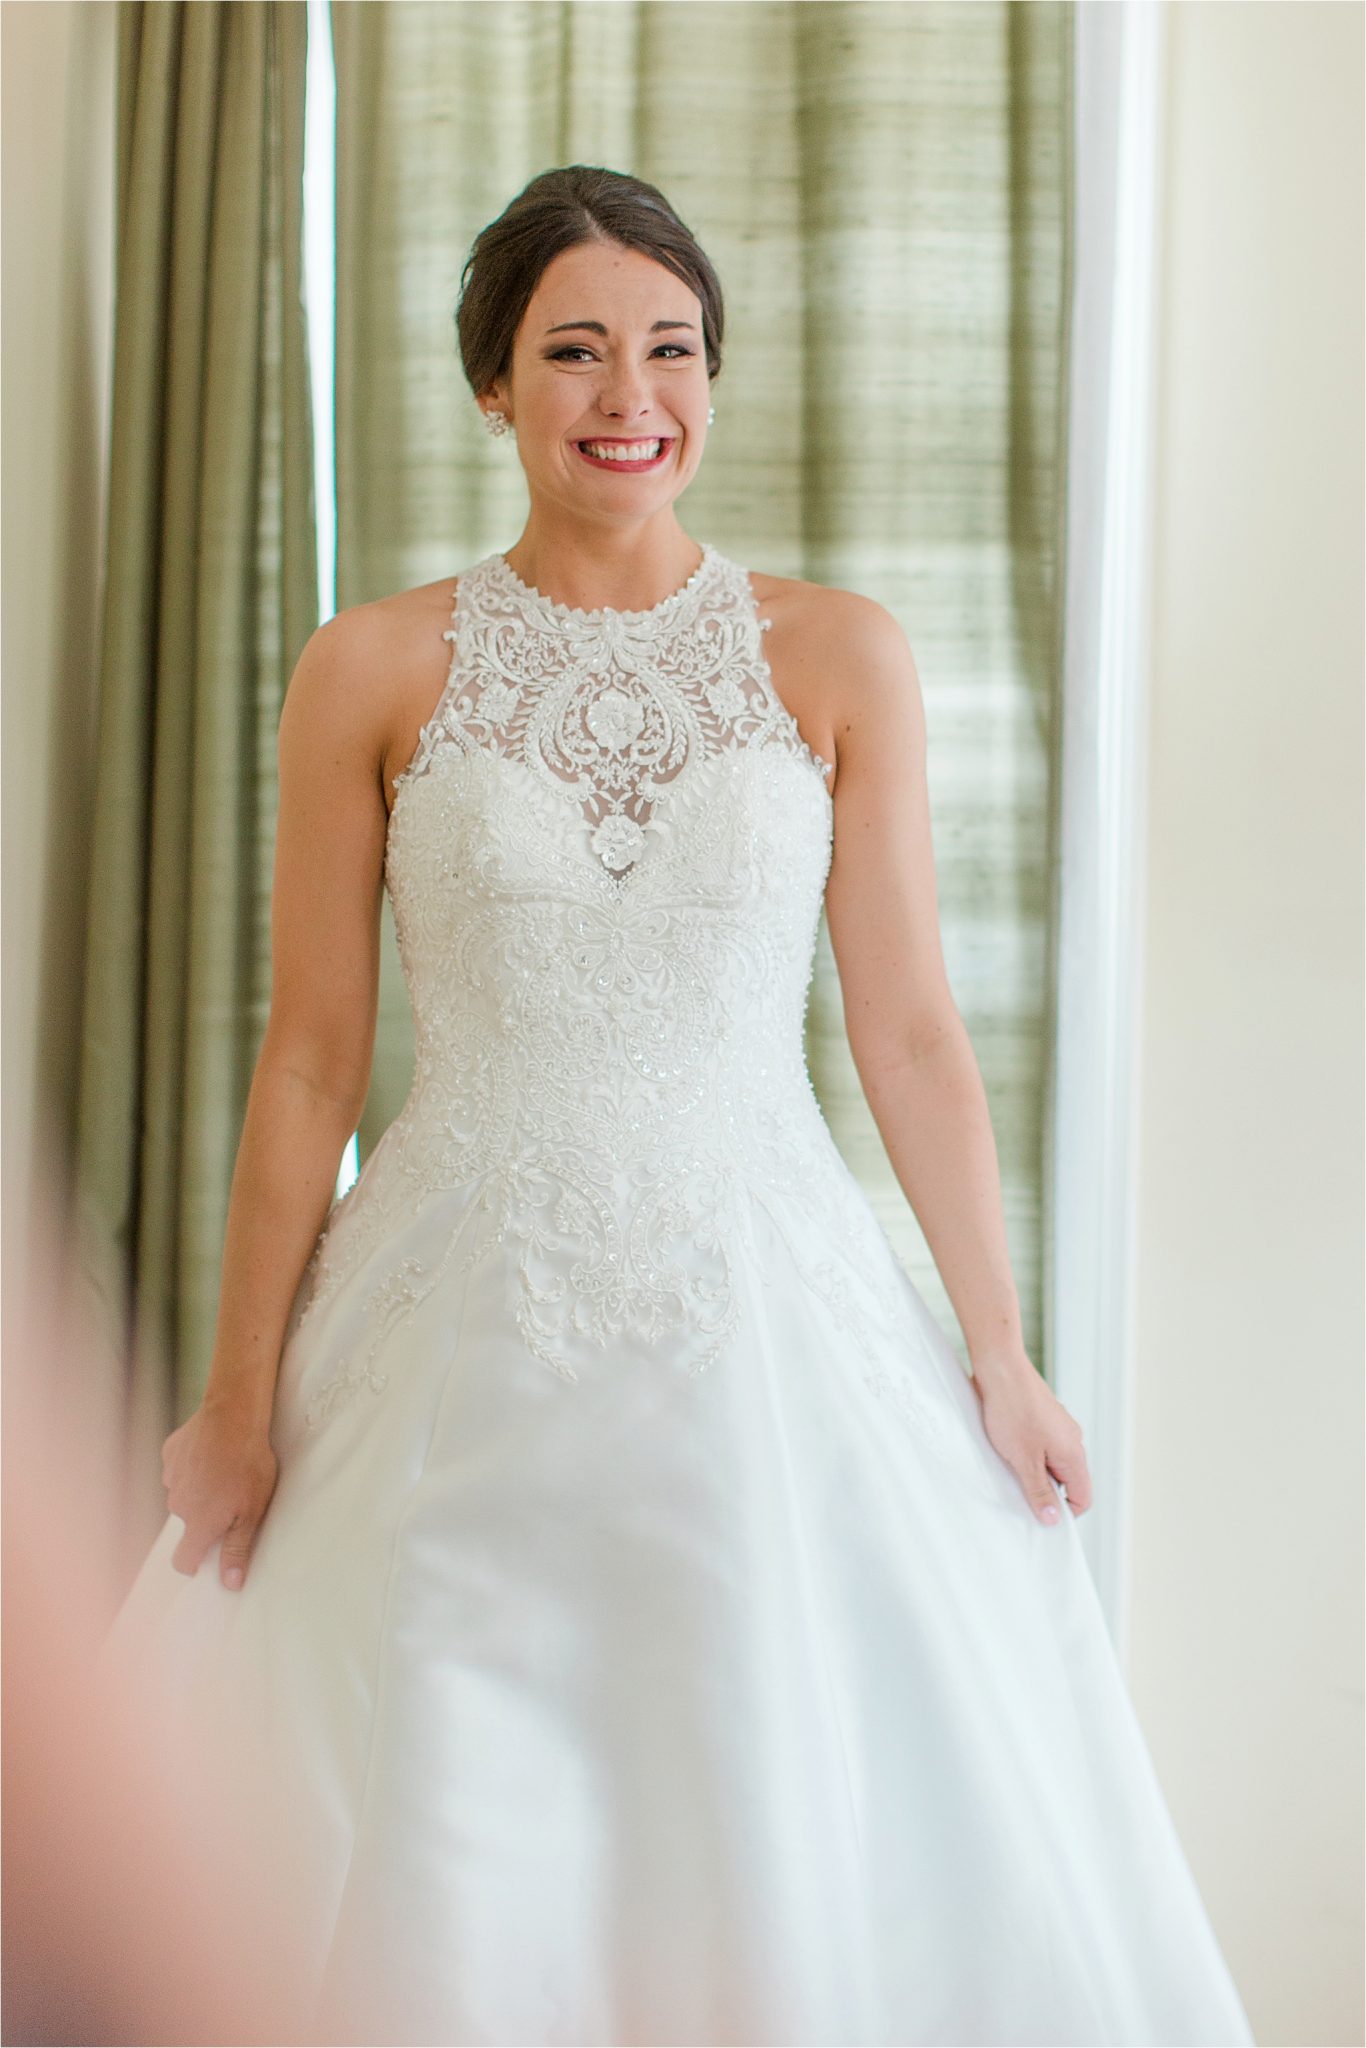 Sonnet House, Birmingham Alabama Wedding Photographer, Bridal portrait, Wedding dress reveal 